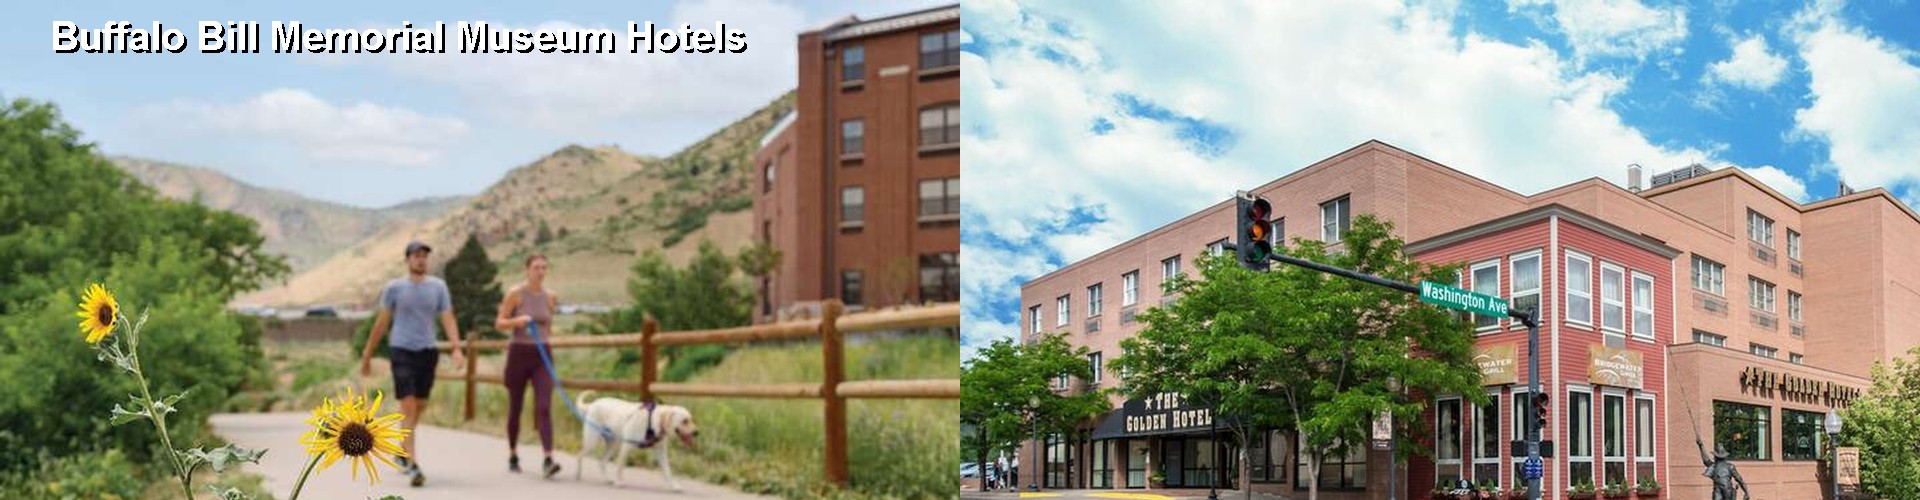 5 Best Hotels near Buffalo Bill Memorial Museum